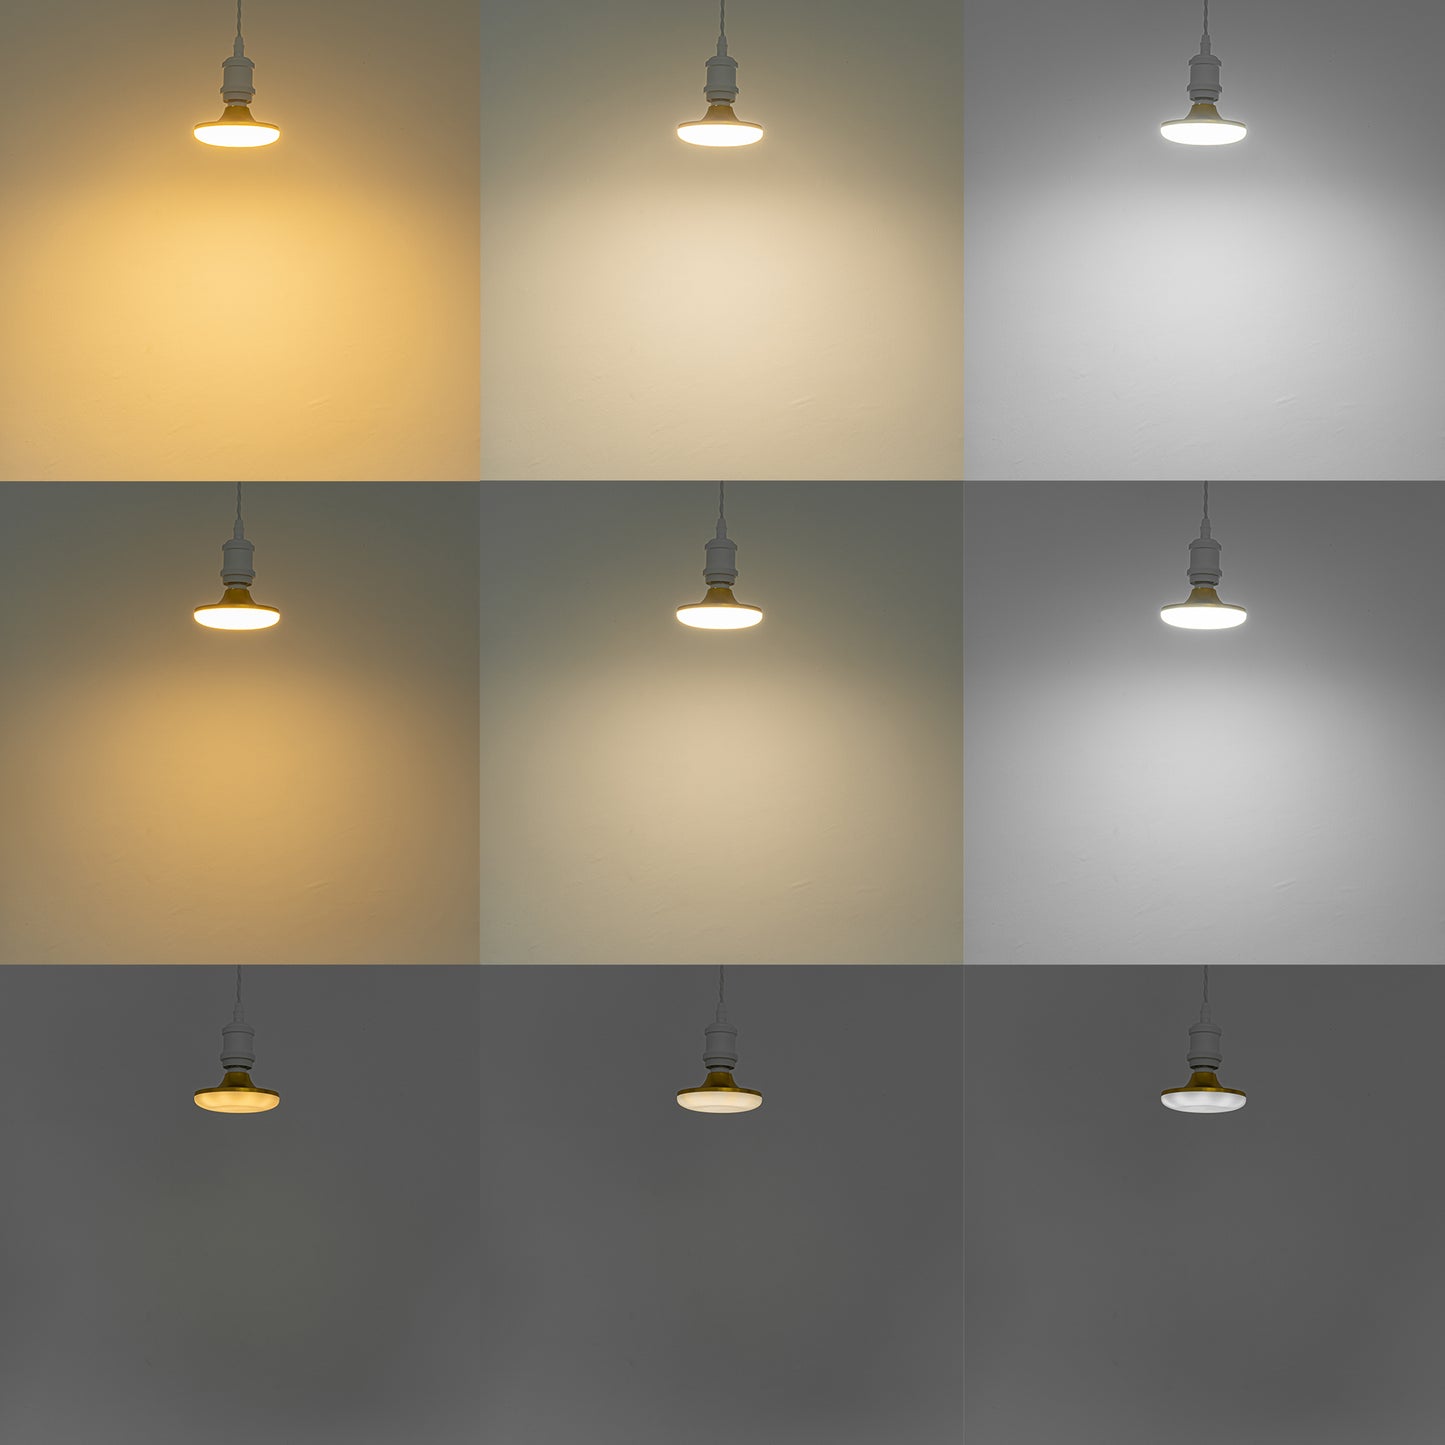 LED電球 スポットライト リモコン E26 7W LED 電球  調光&調色機能 COB光源 屋内用 壁 天井 展示 撮影